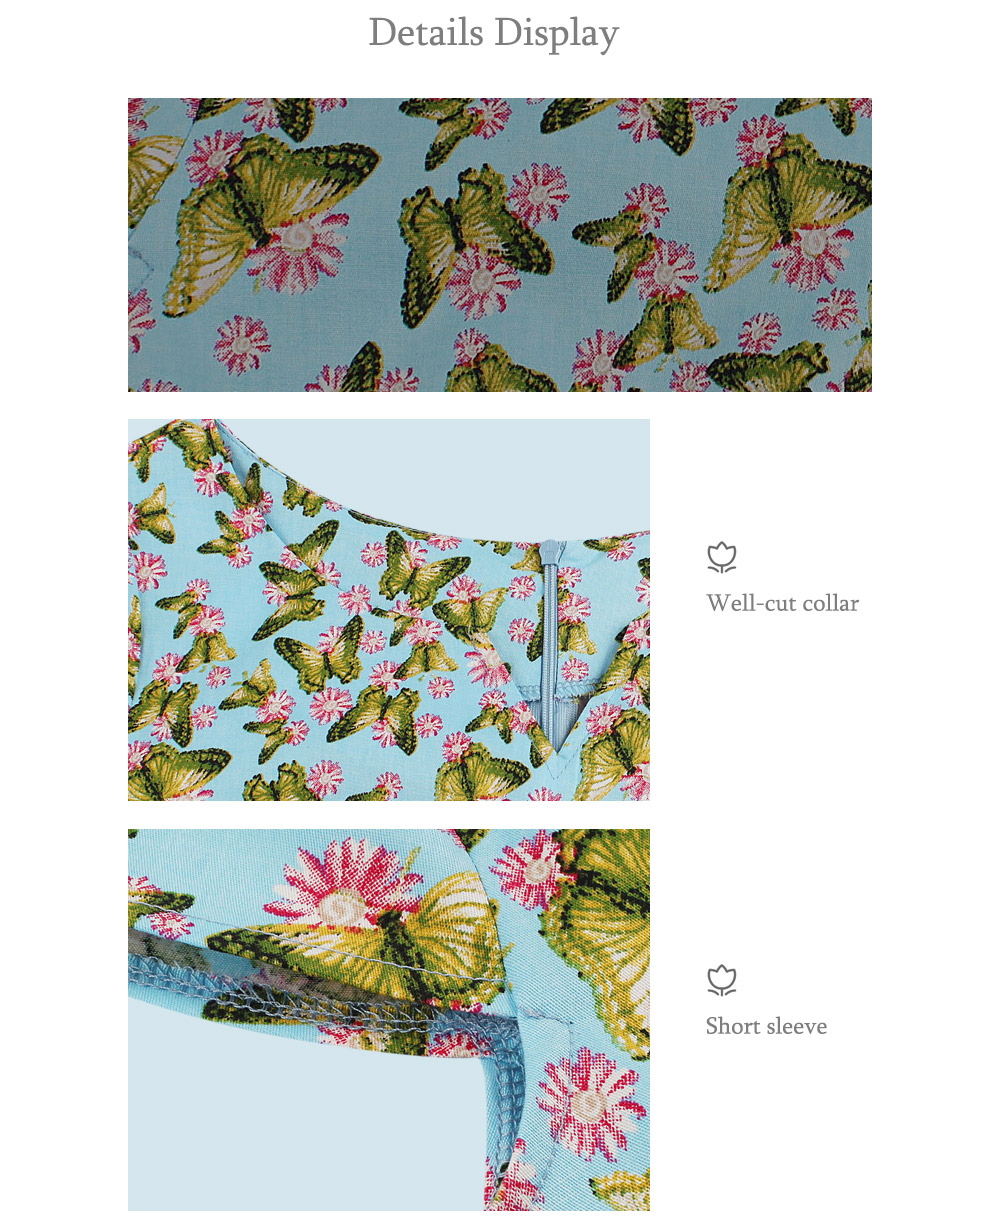 Vintage Short Sleeve Butterfly Floral Print A-line Zipper Dress for Women